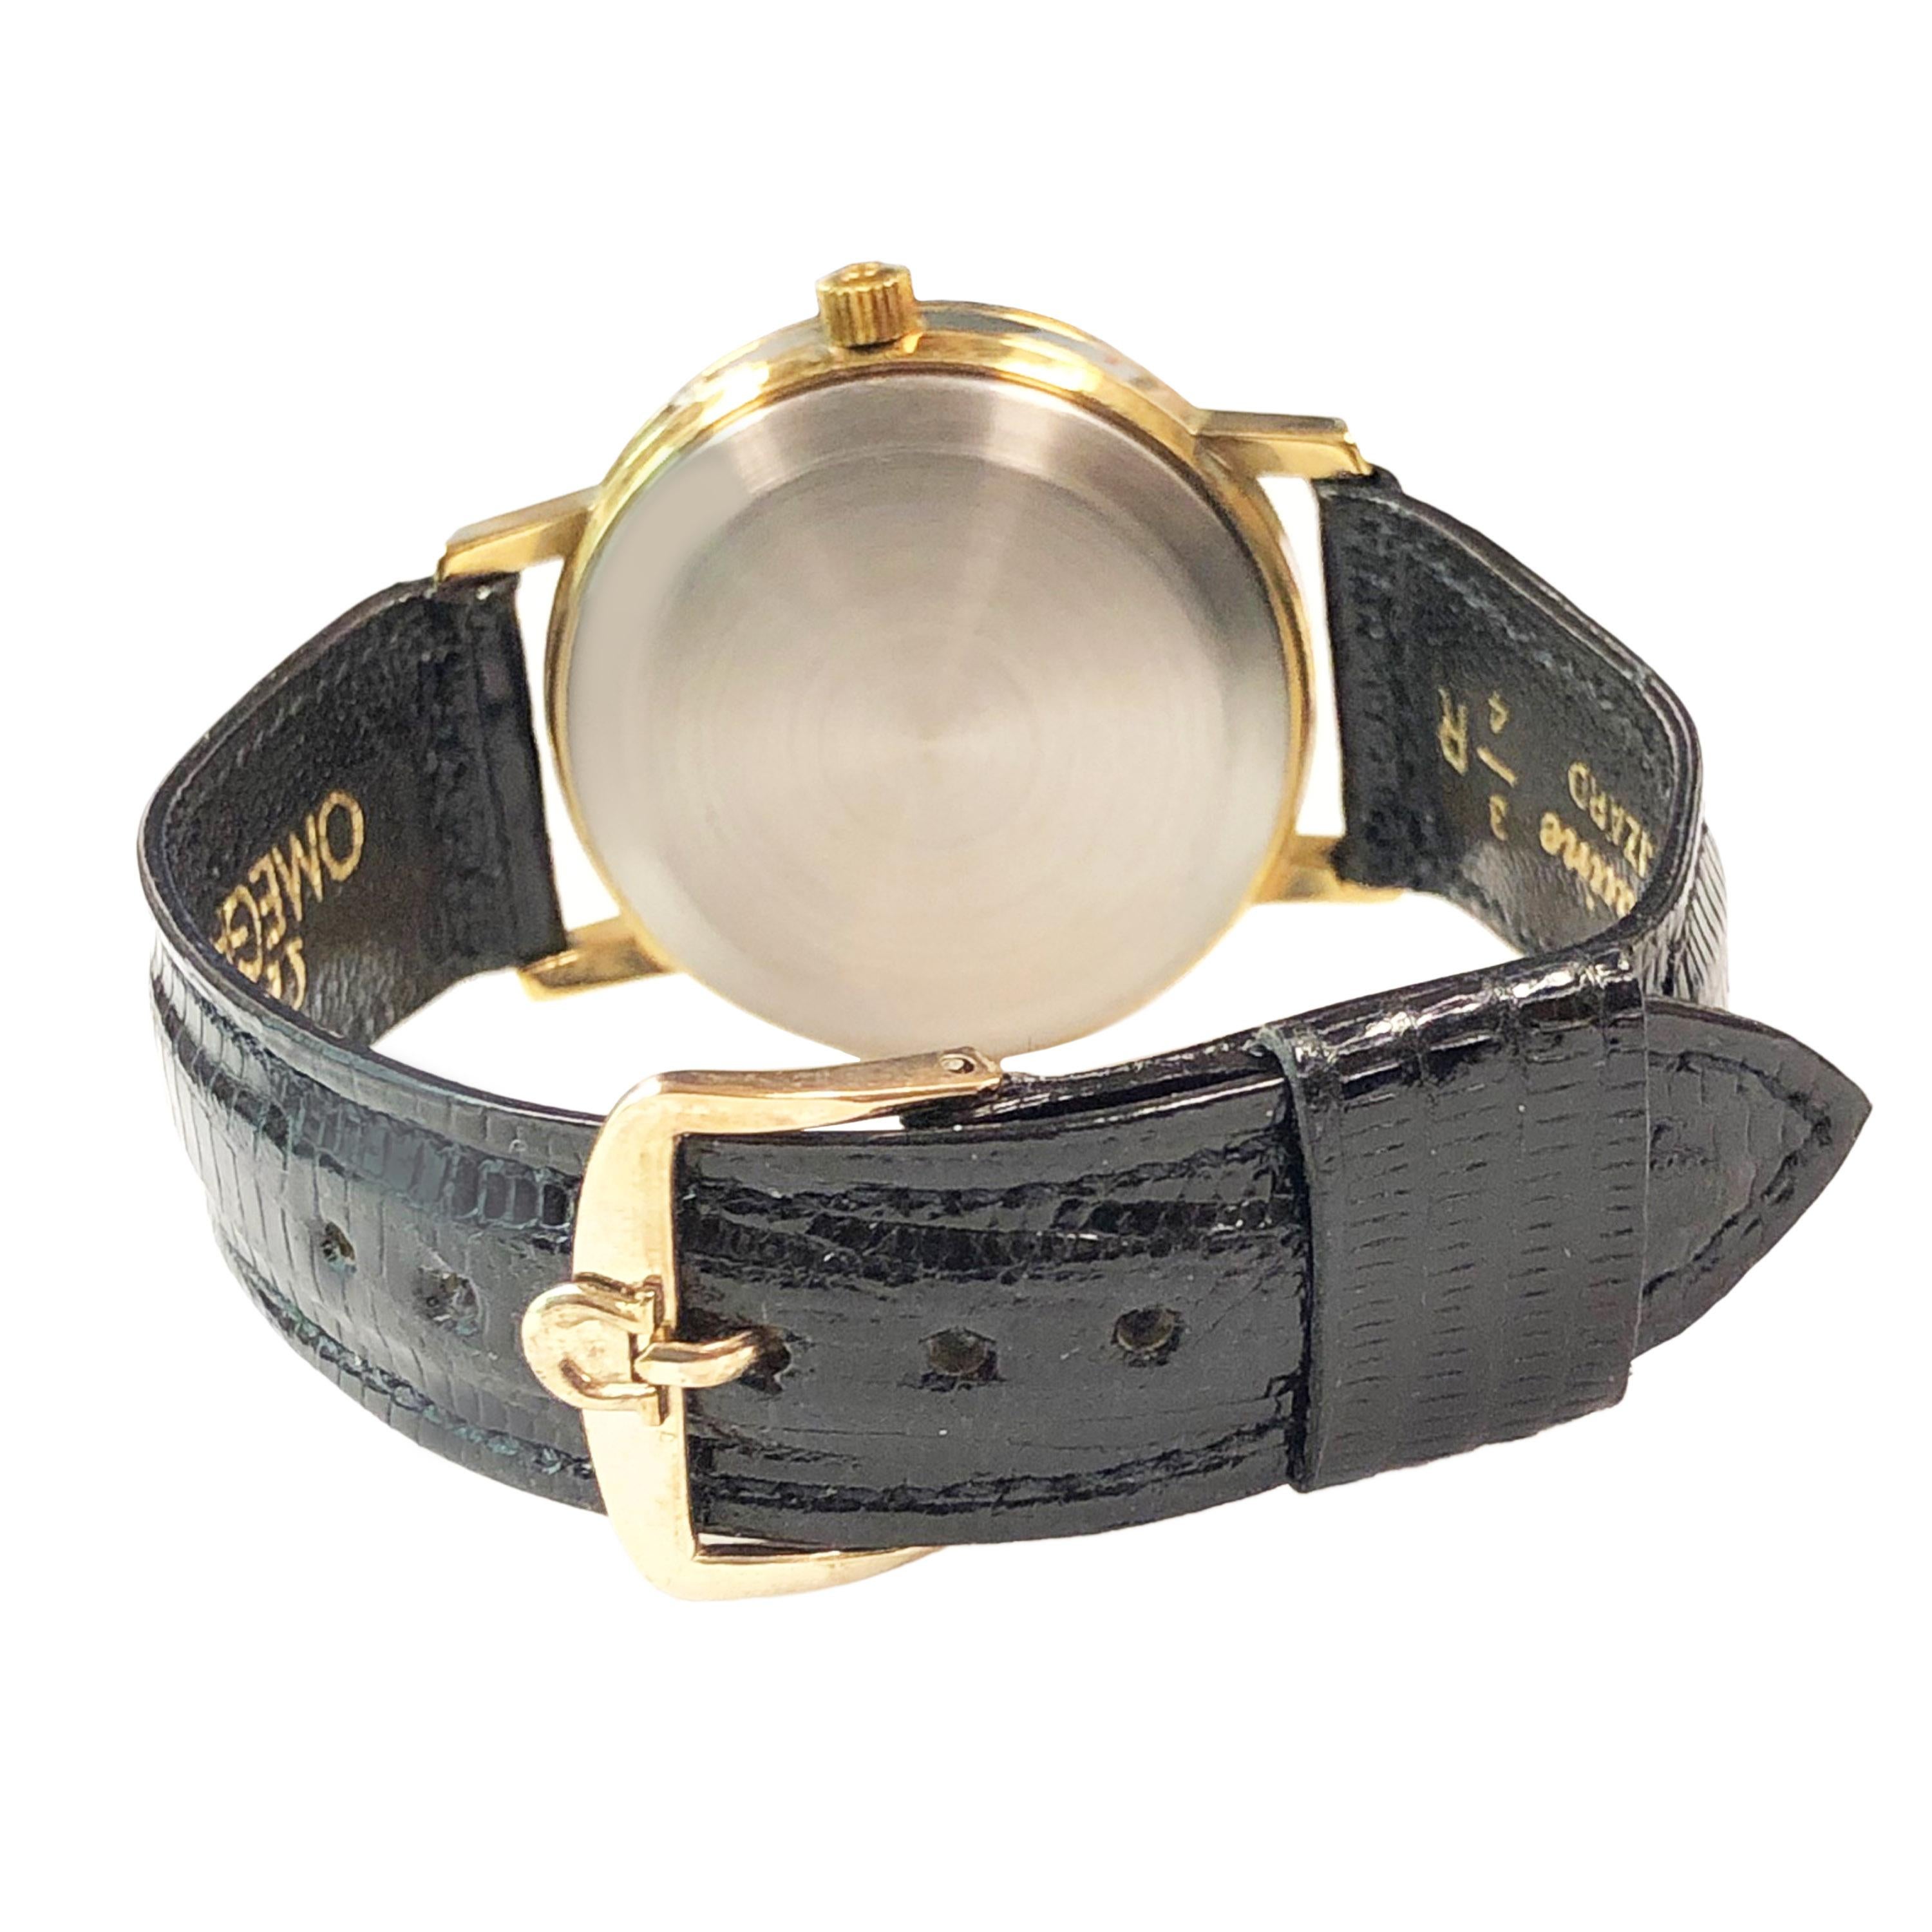 Men's Omega 1960s Automatic Calendar Gold Top Wristwatch New Never Worn